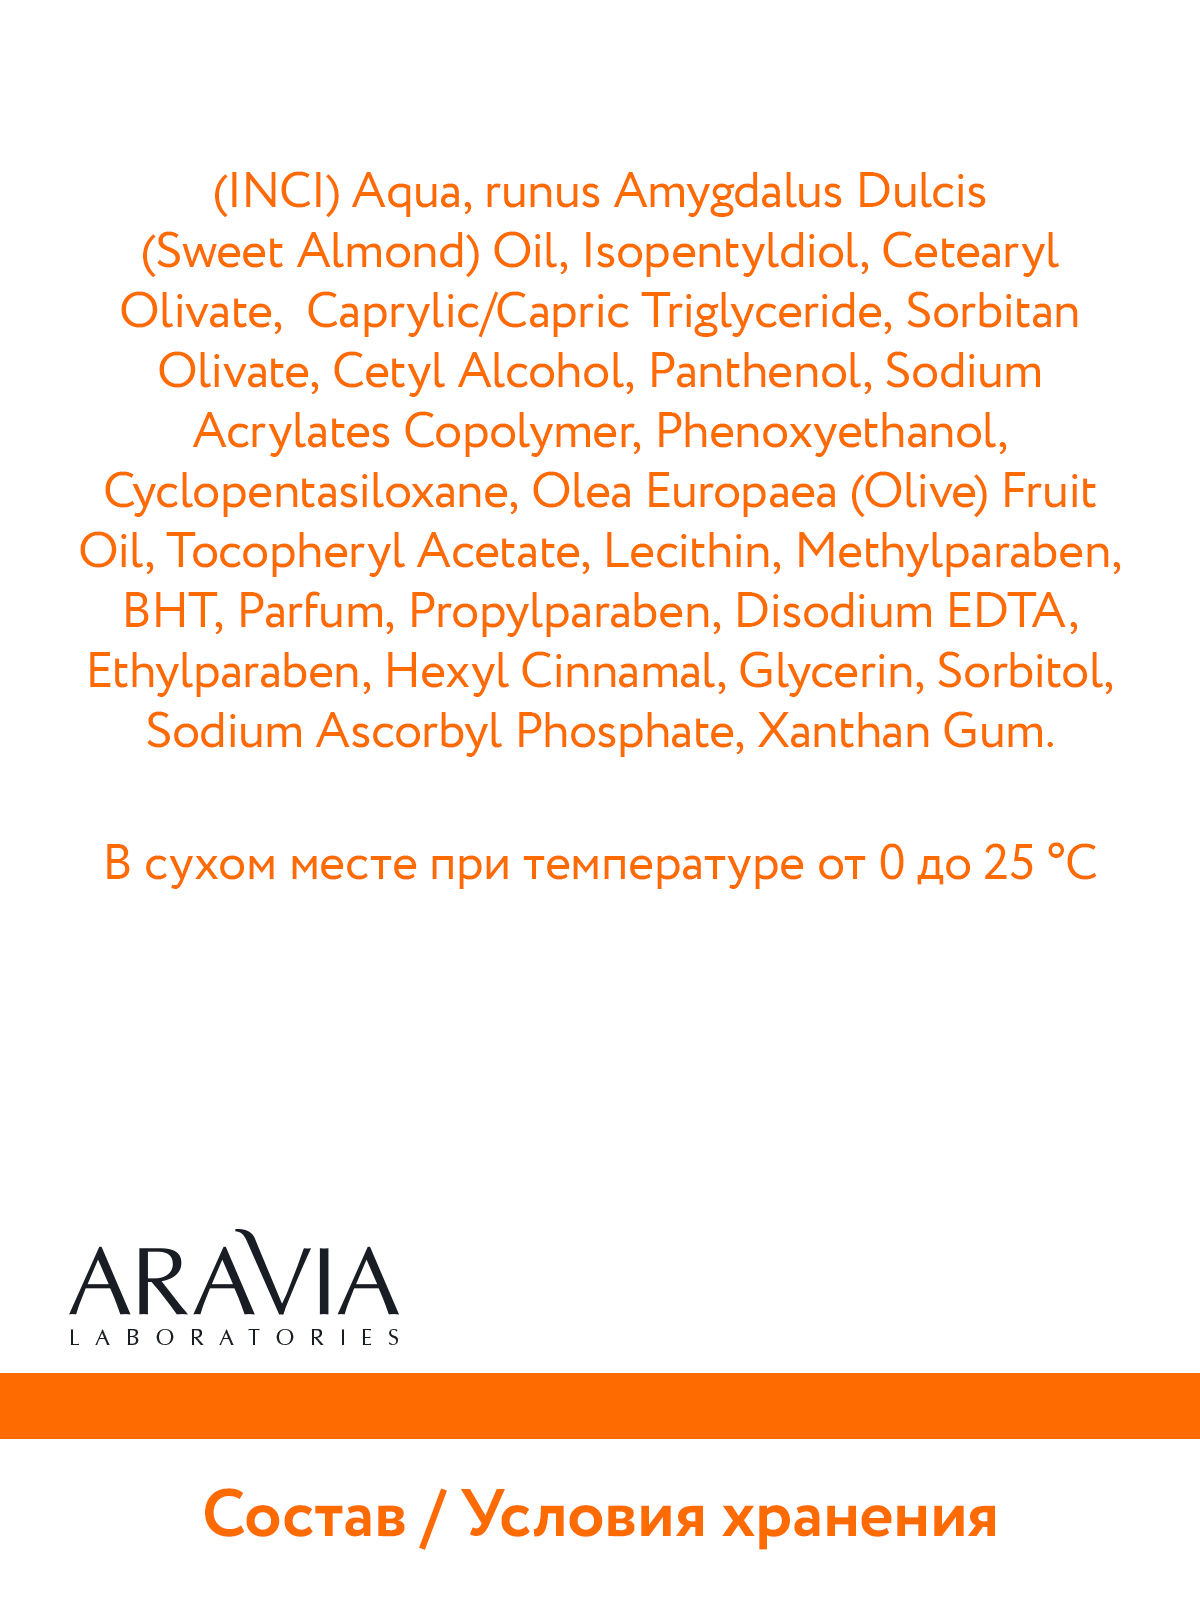 Крем для лица ARAVIA Laboratories для сияния кожи с Витамином С Vitamin-C Power Radiance Cream 50 мл - фото 11